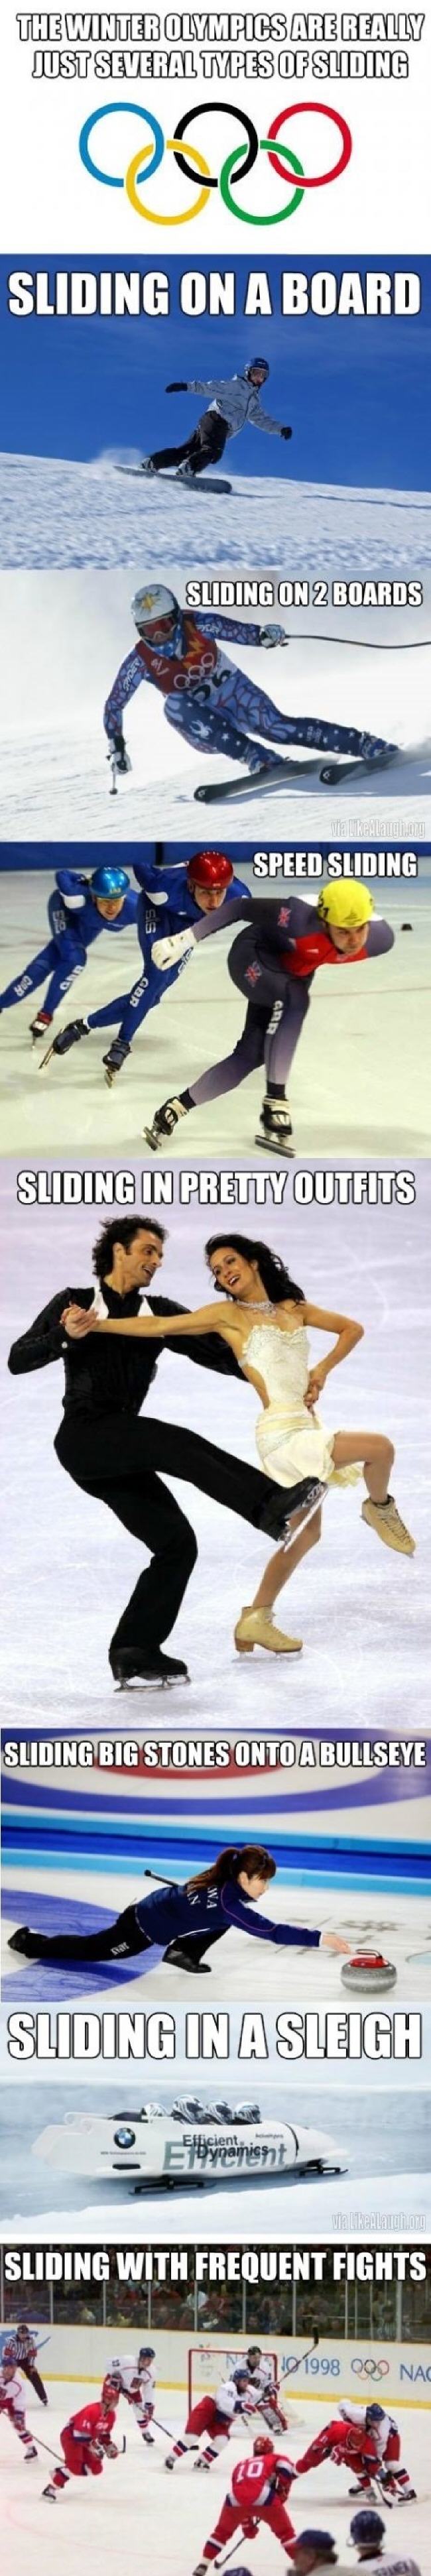 Winter Olympics sliding